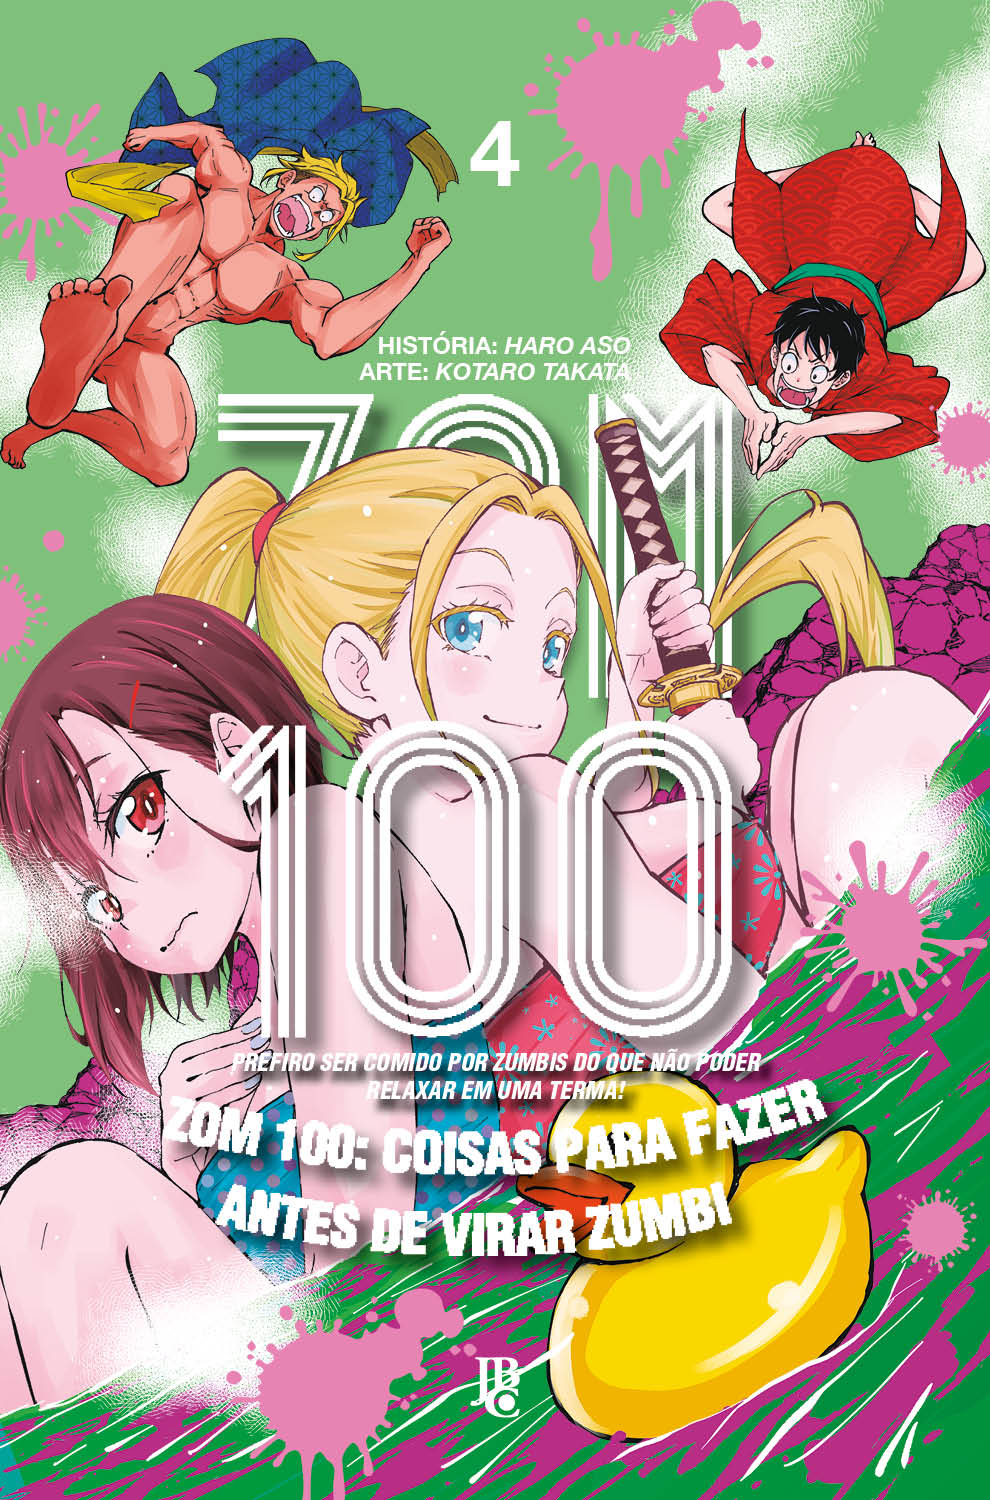 VENDER PACK DO PÉ VERSÃO ZOM: 100 #anime #dublando #comedia #zom100buc